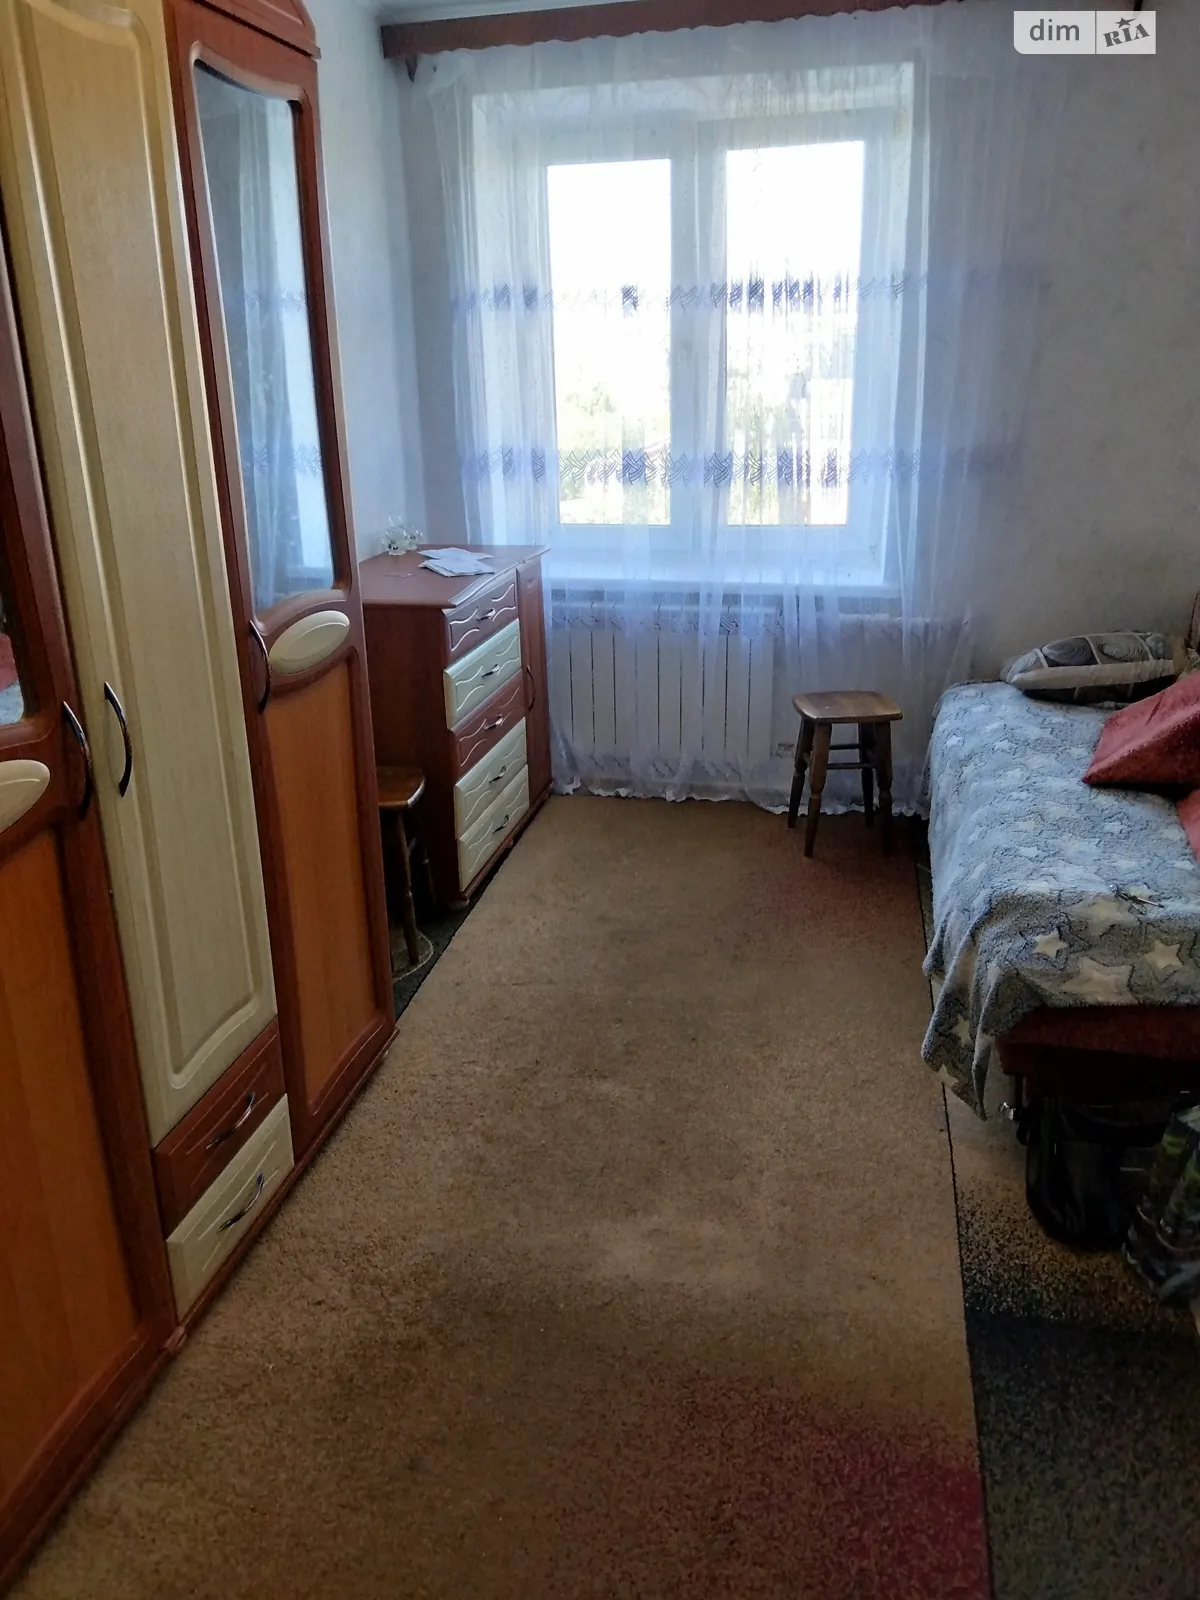 Продается комната 16 кв. м в Ровно - фото 2